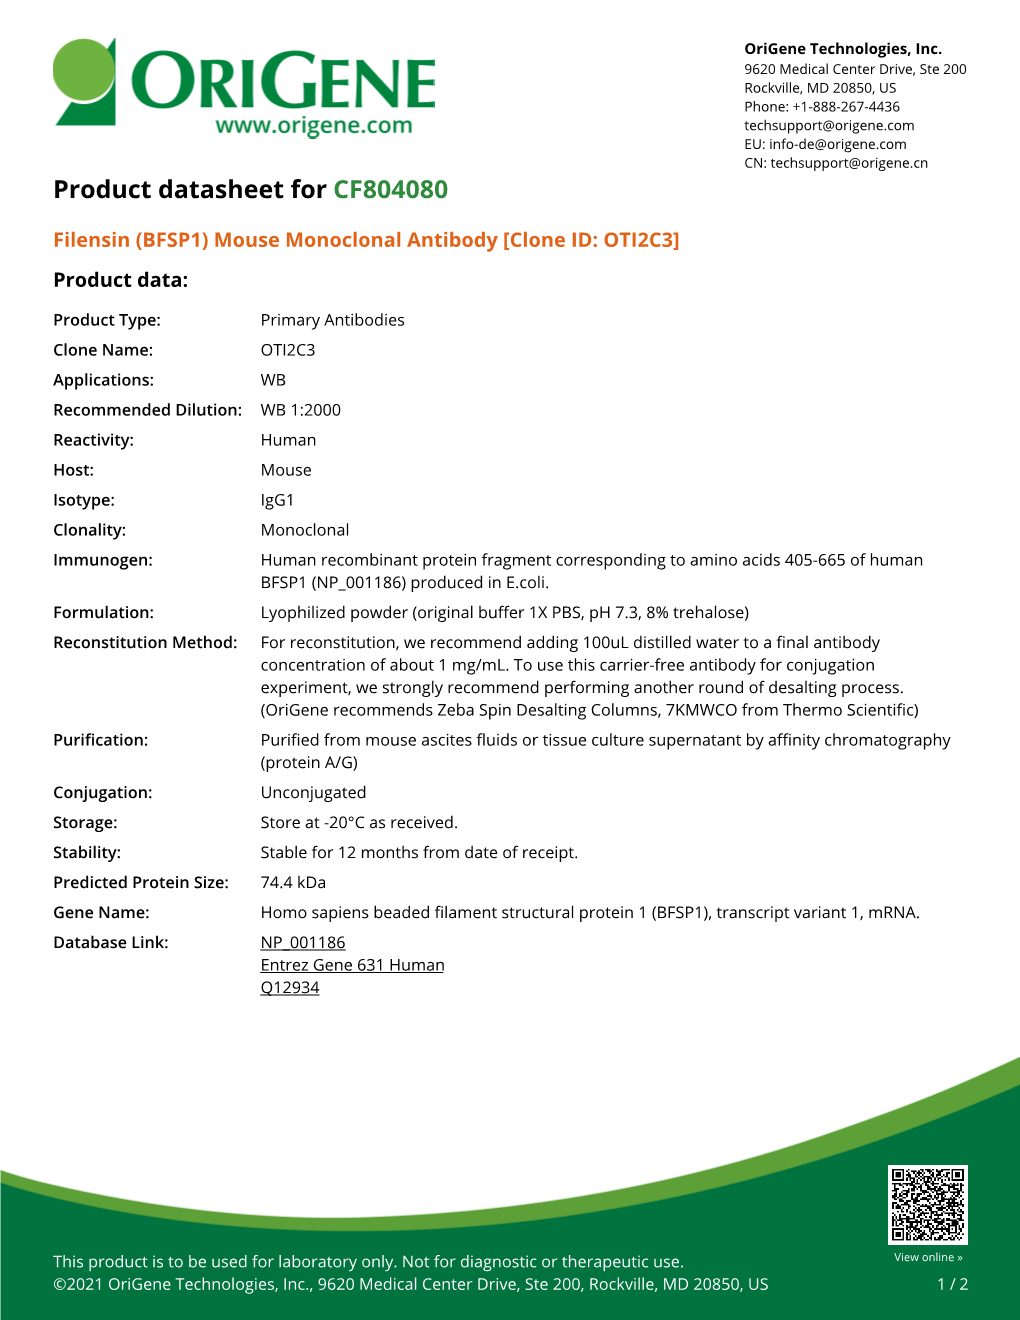 Filensin (BFSP1) Mouse Monoclonal Antibody [Clone ID: OTI2C3] Product Data